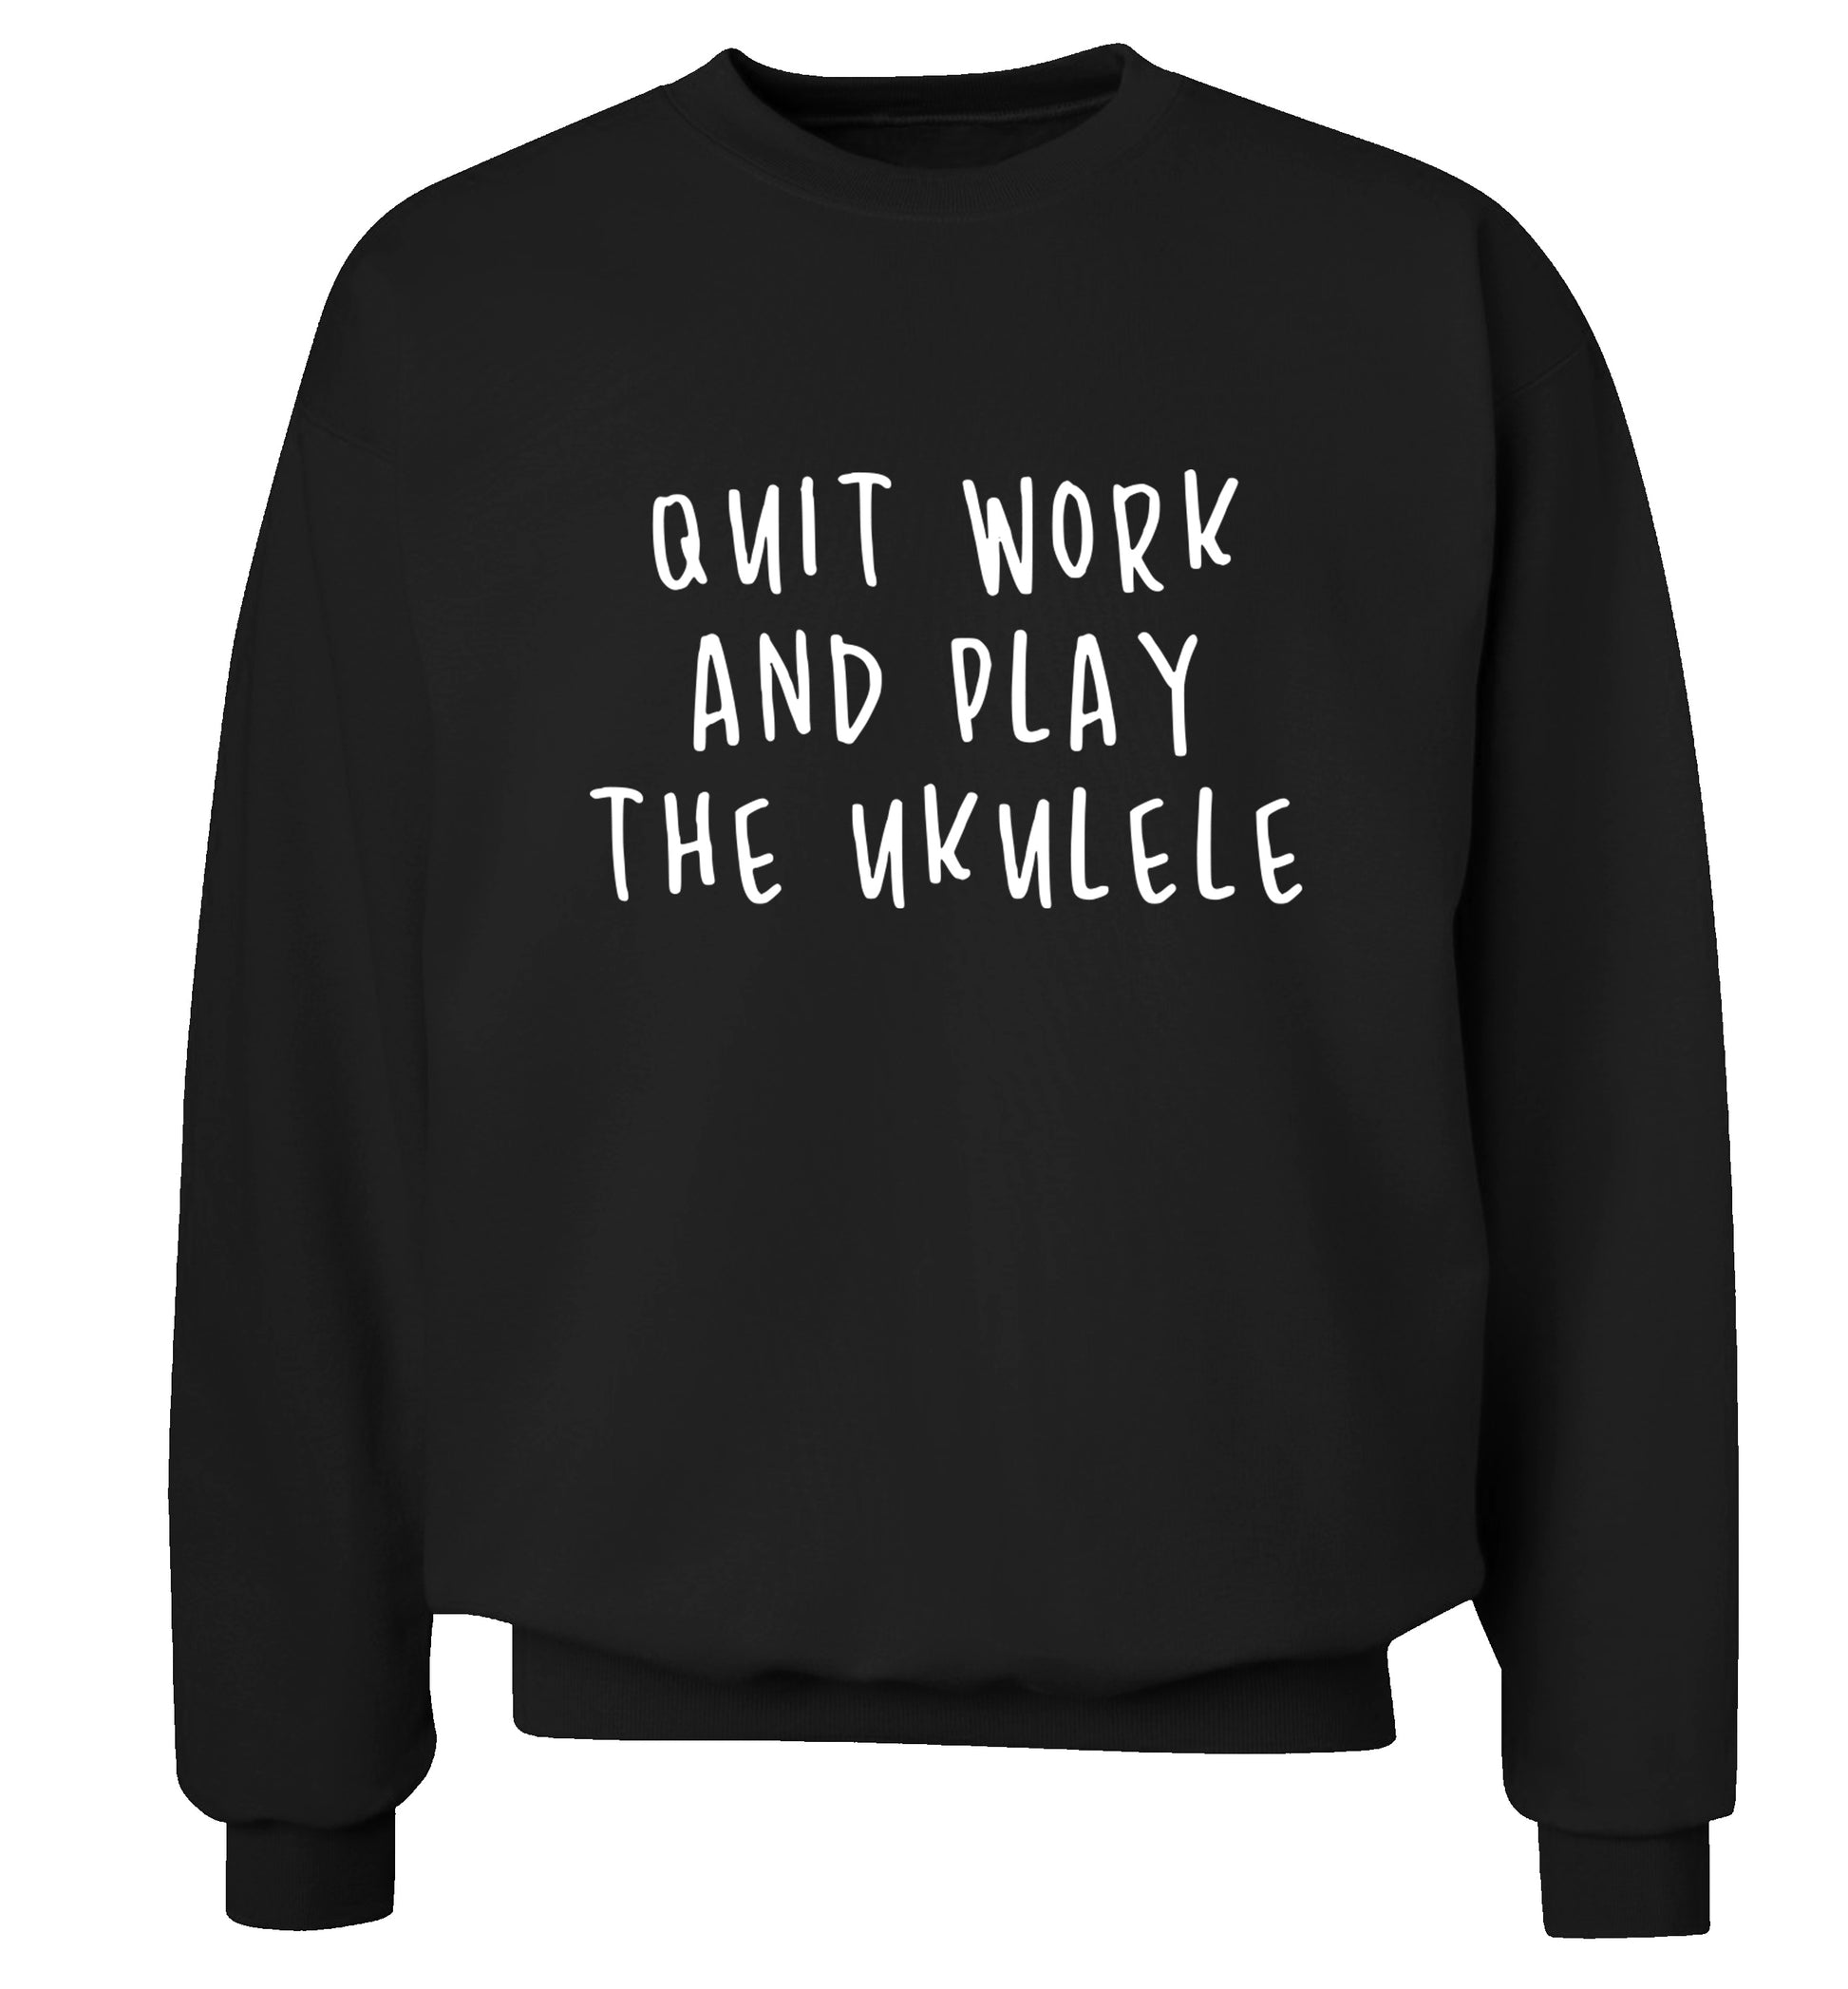 Quit work and play the ukulele Adult's unisex black Sweater 2XL